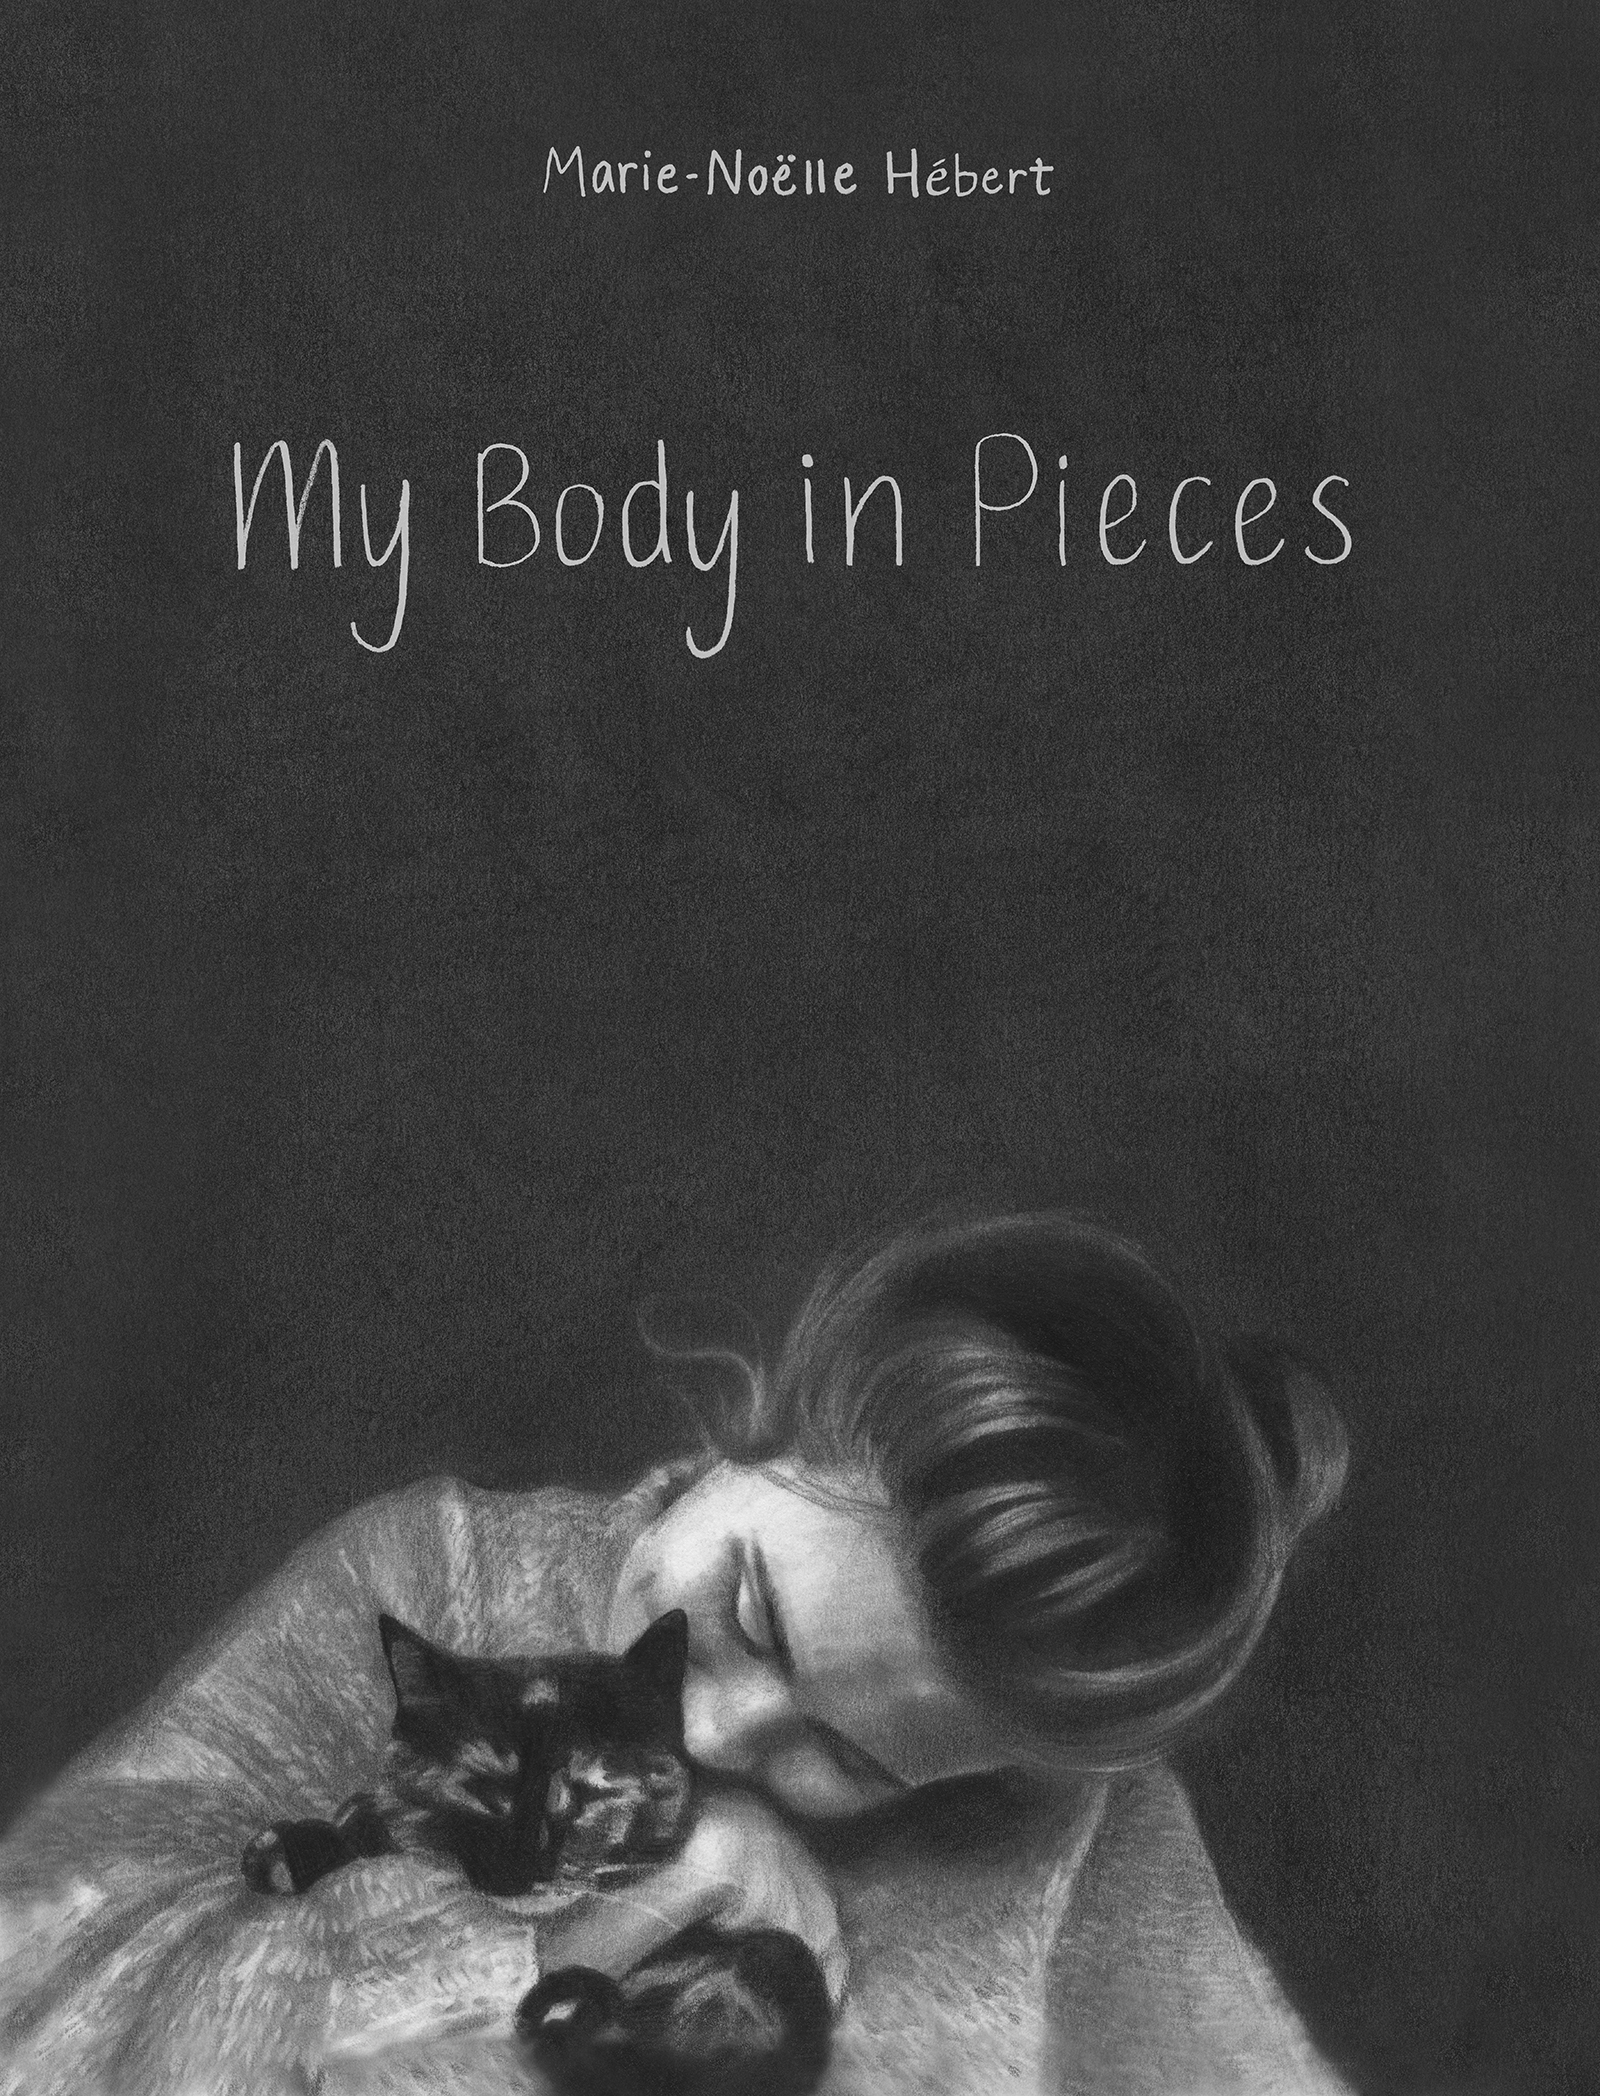 Marie-Noëlle Hébert's My Body in Pieces